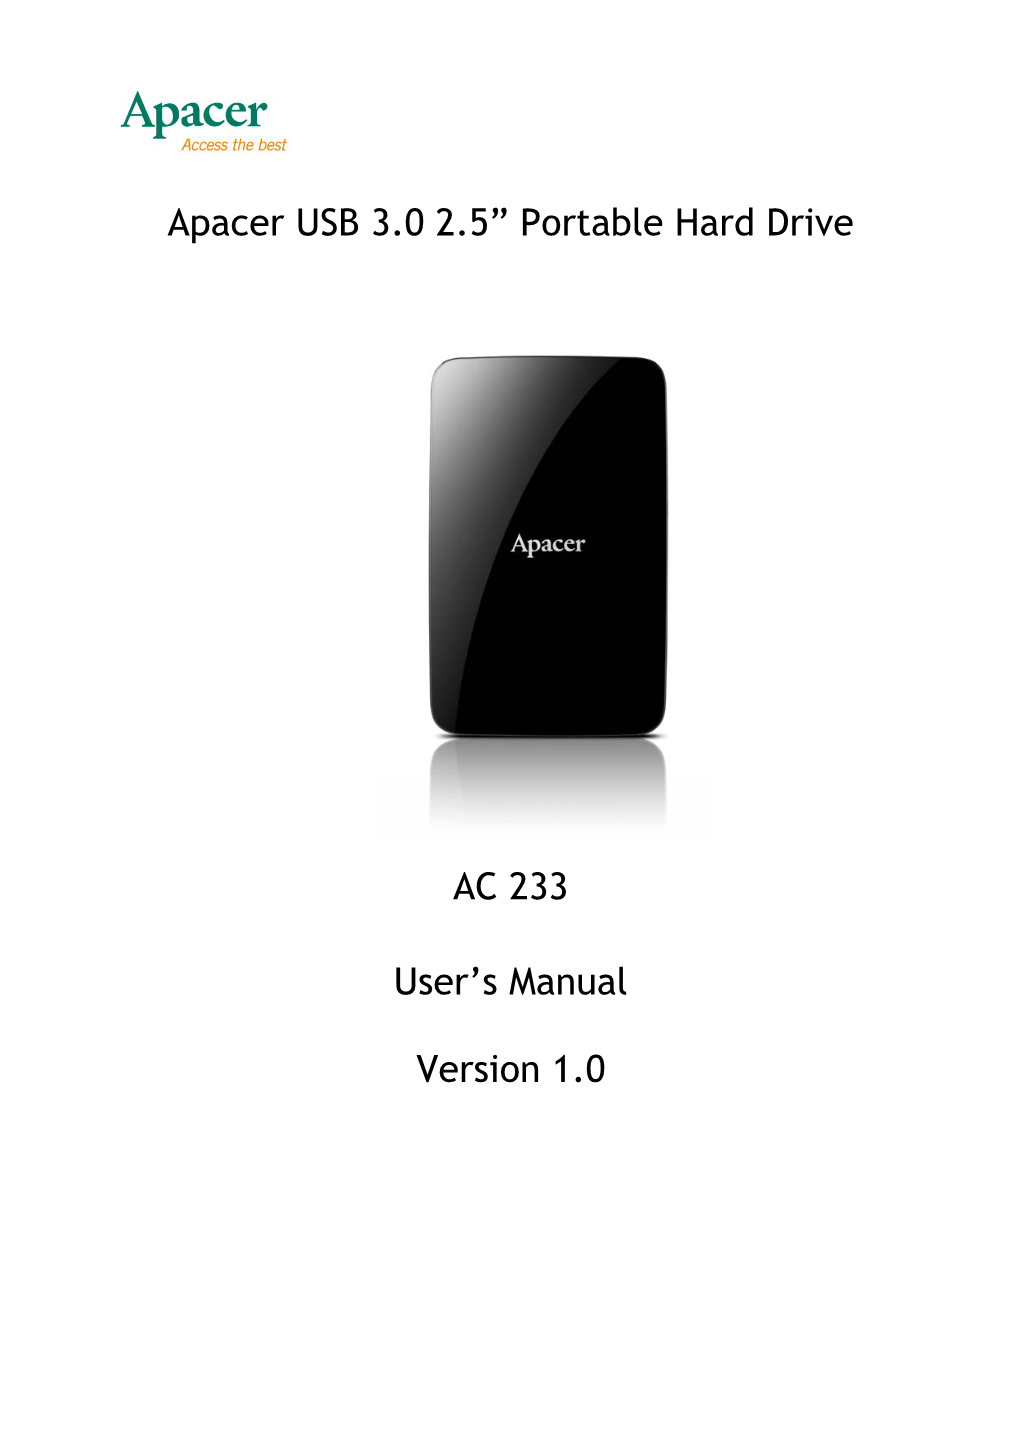 Apacer USB 3.0 2.5” Portable Hard Drive AC 233 User's Manual